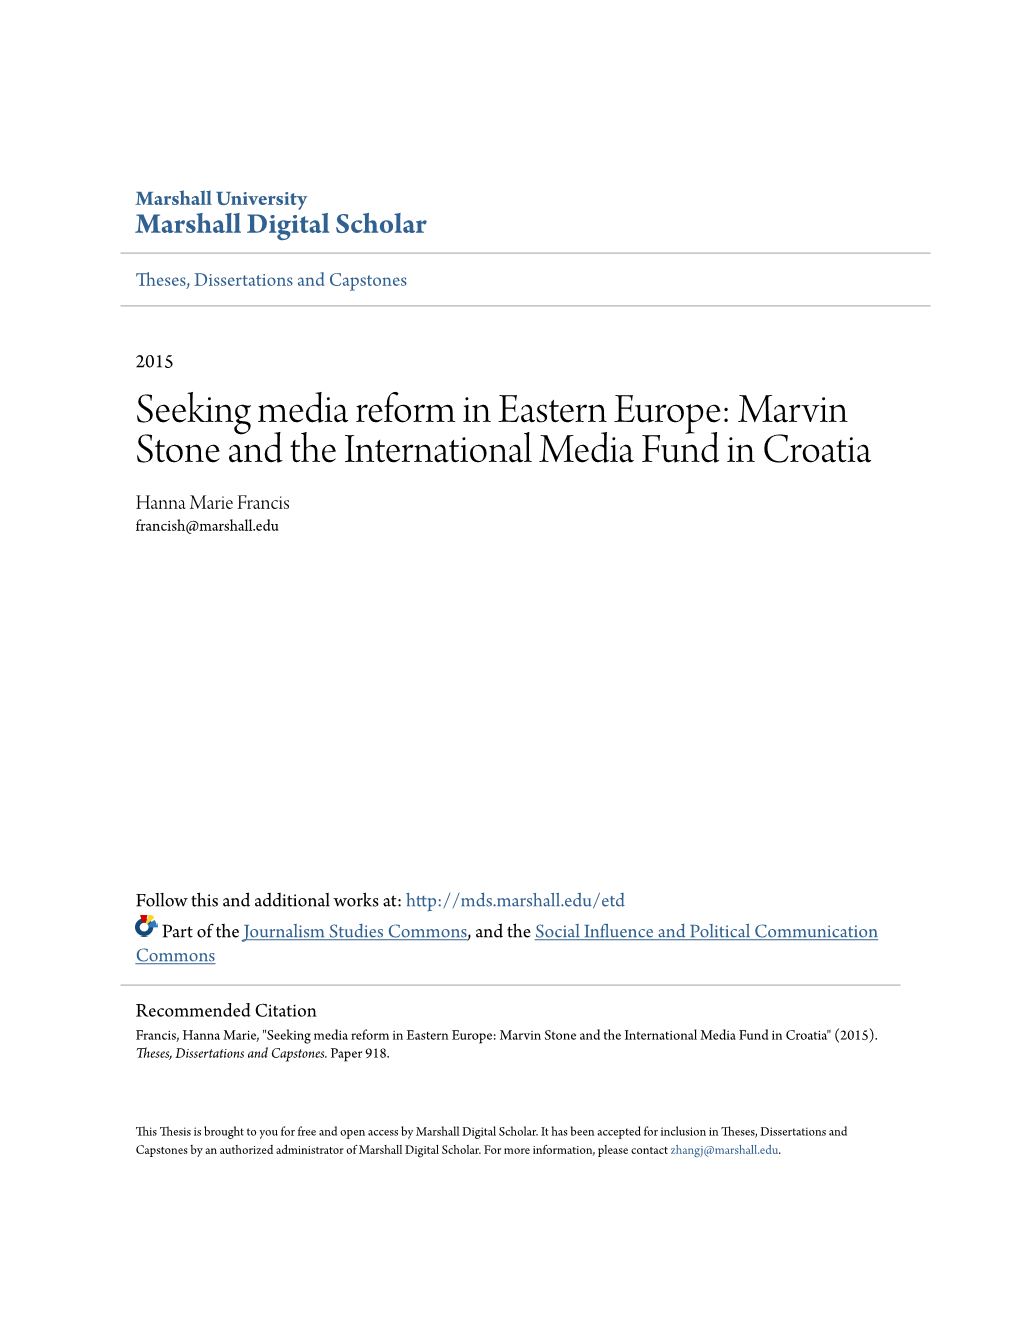 Marvin Stone and the International Media Fund in Croatia Hanna Marie Francis Francish@Marshall.Edu